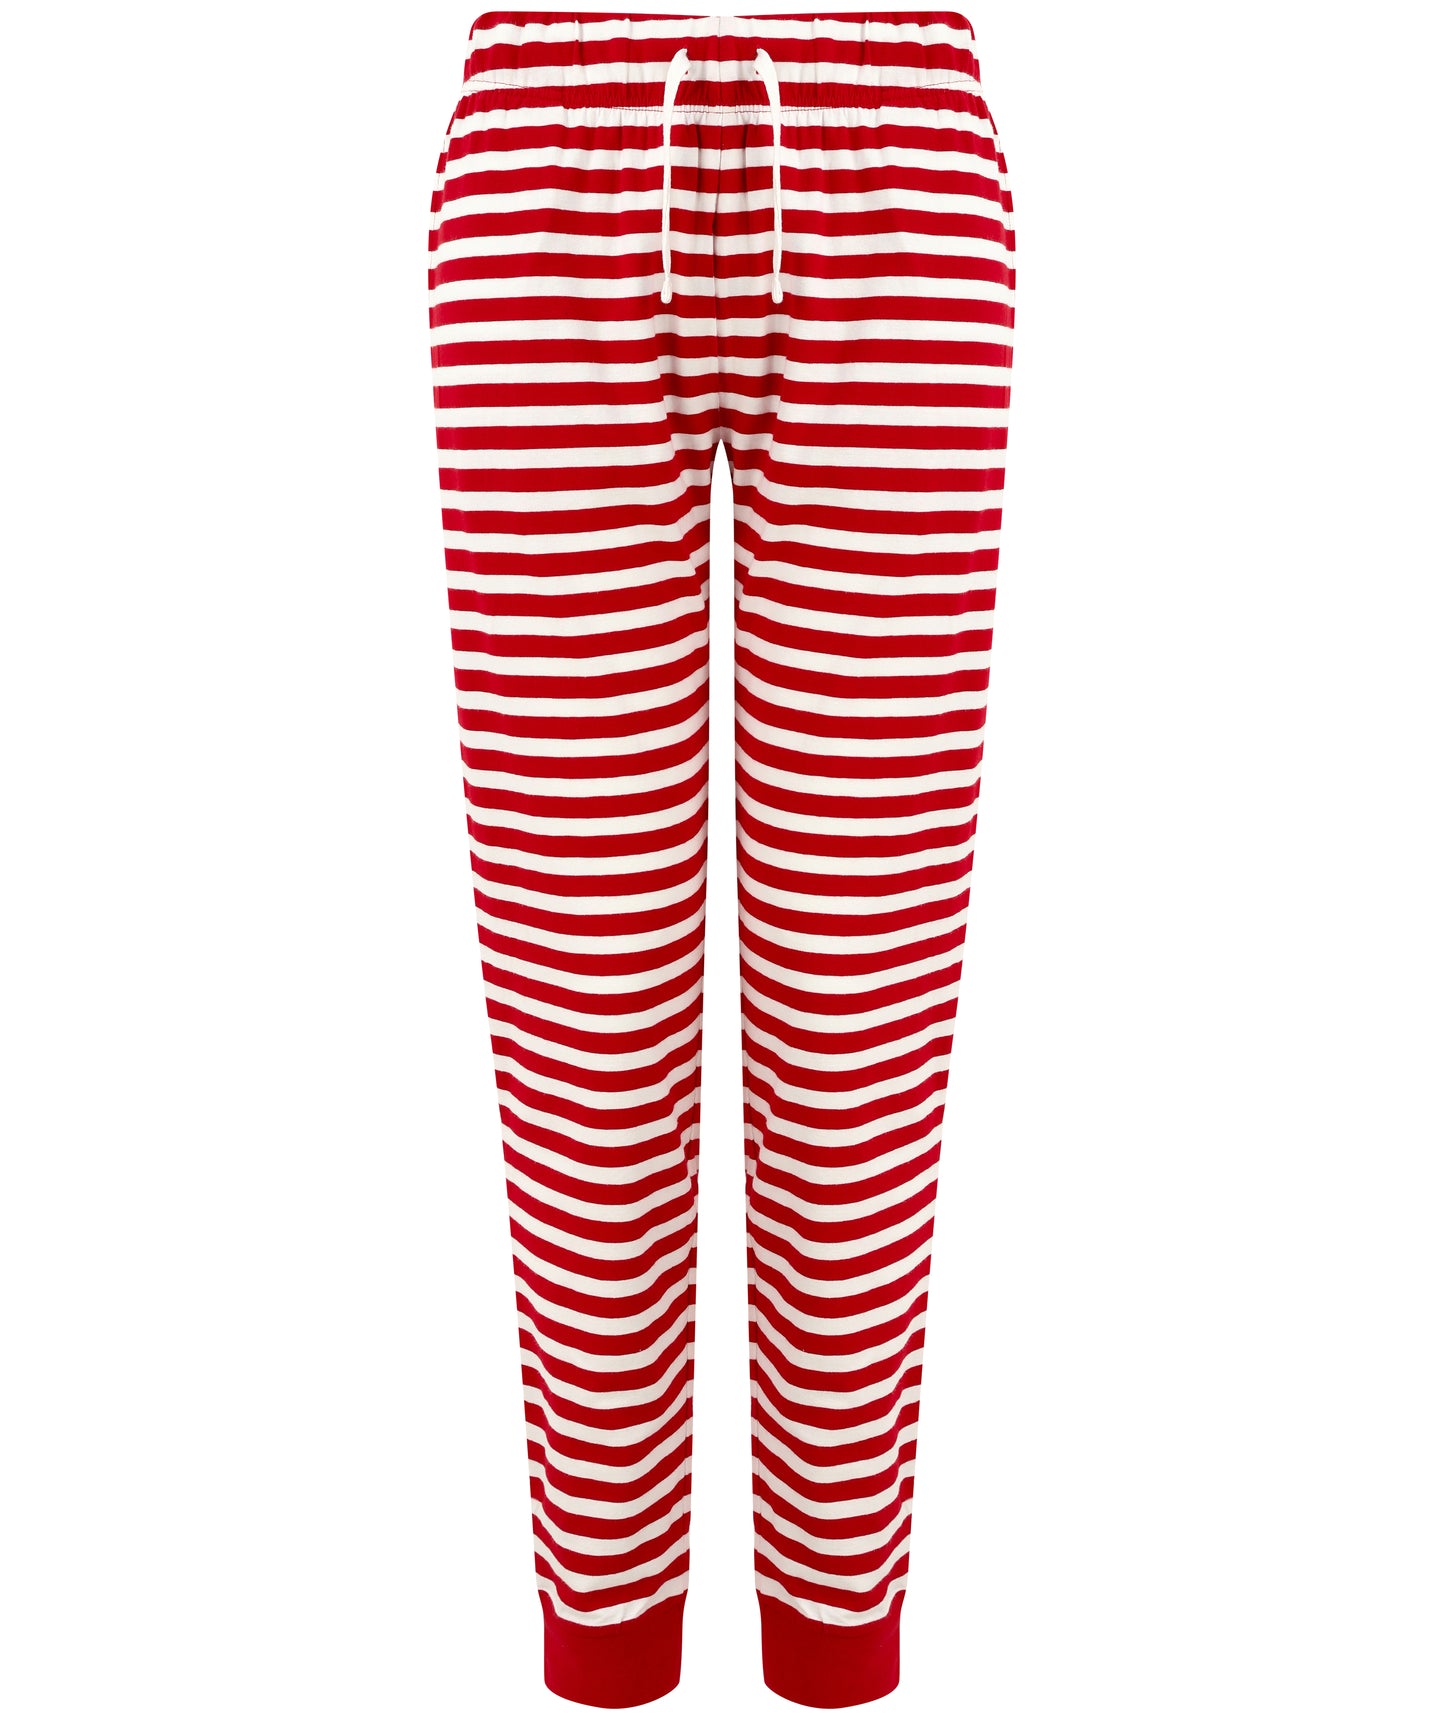 Matching Pajamas For The Family For Christmas